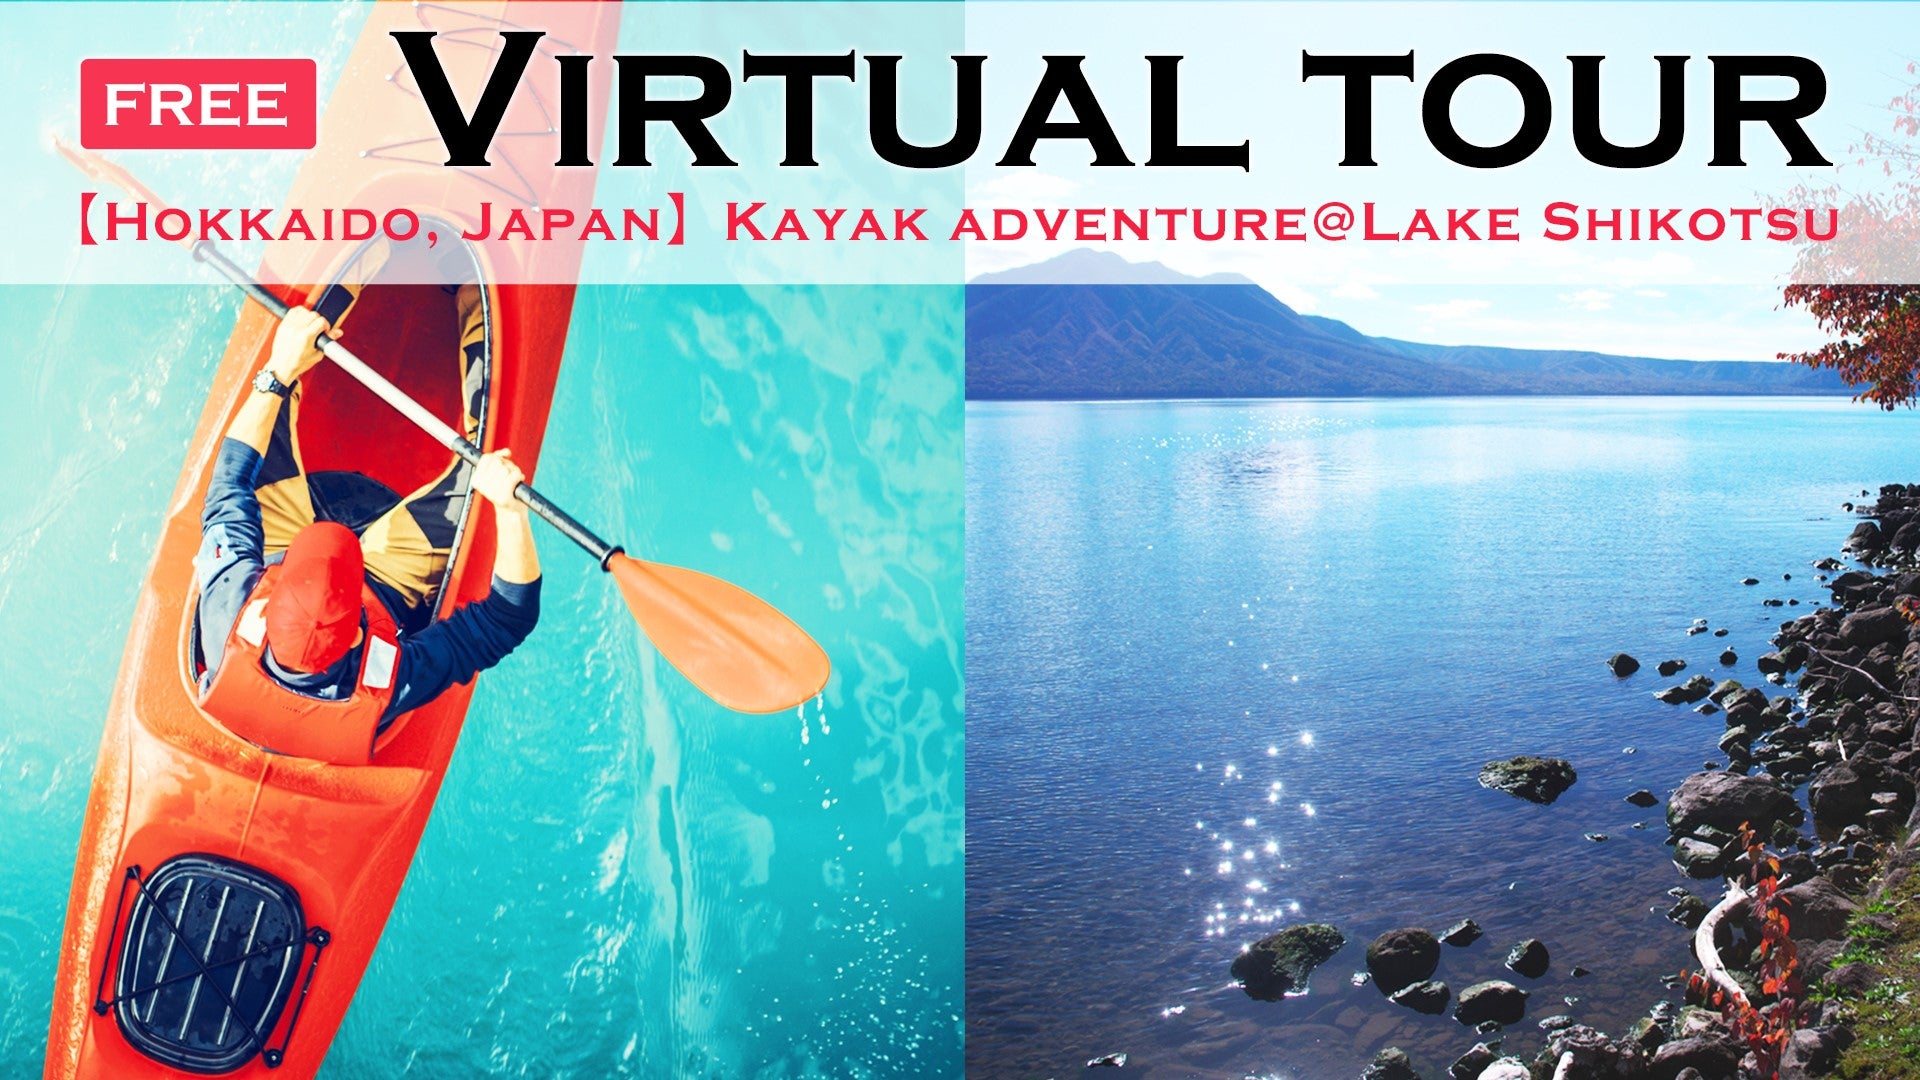 Hokkaido , Japan /Kayak adventure on Lake Shikotsu